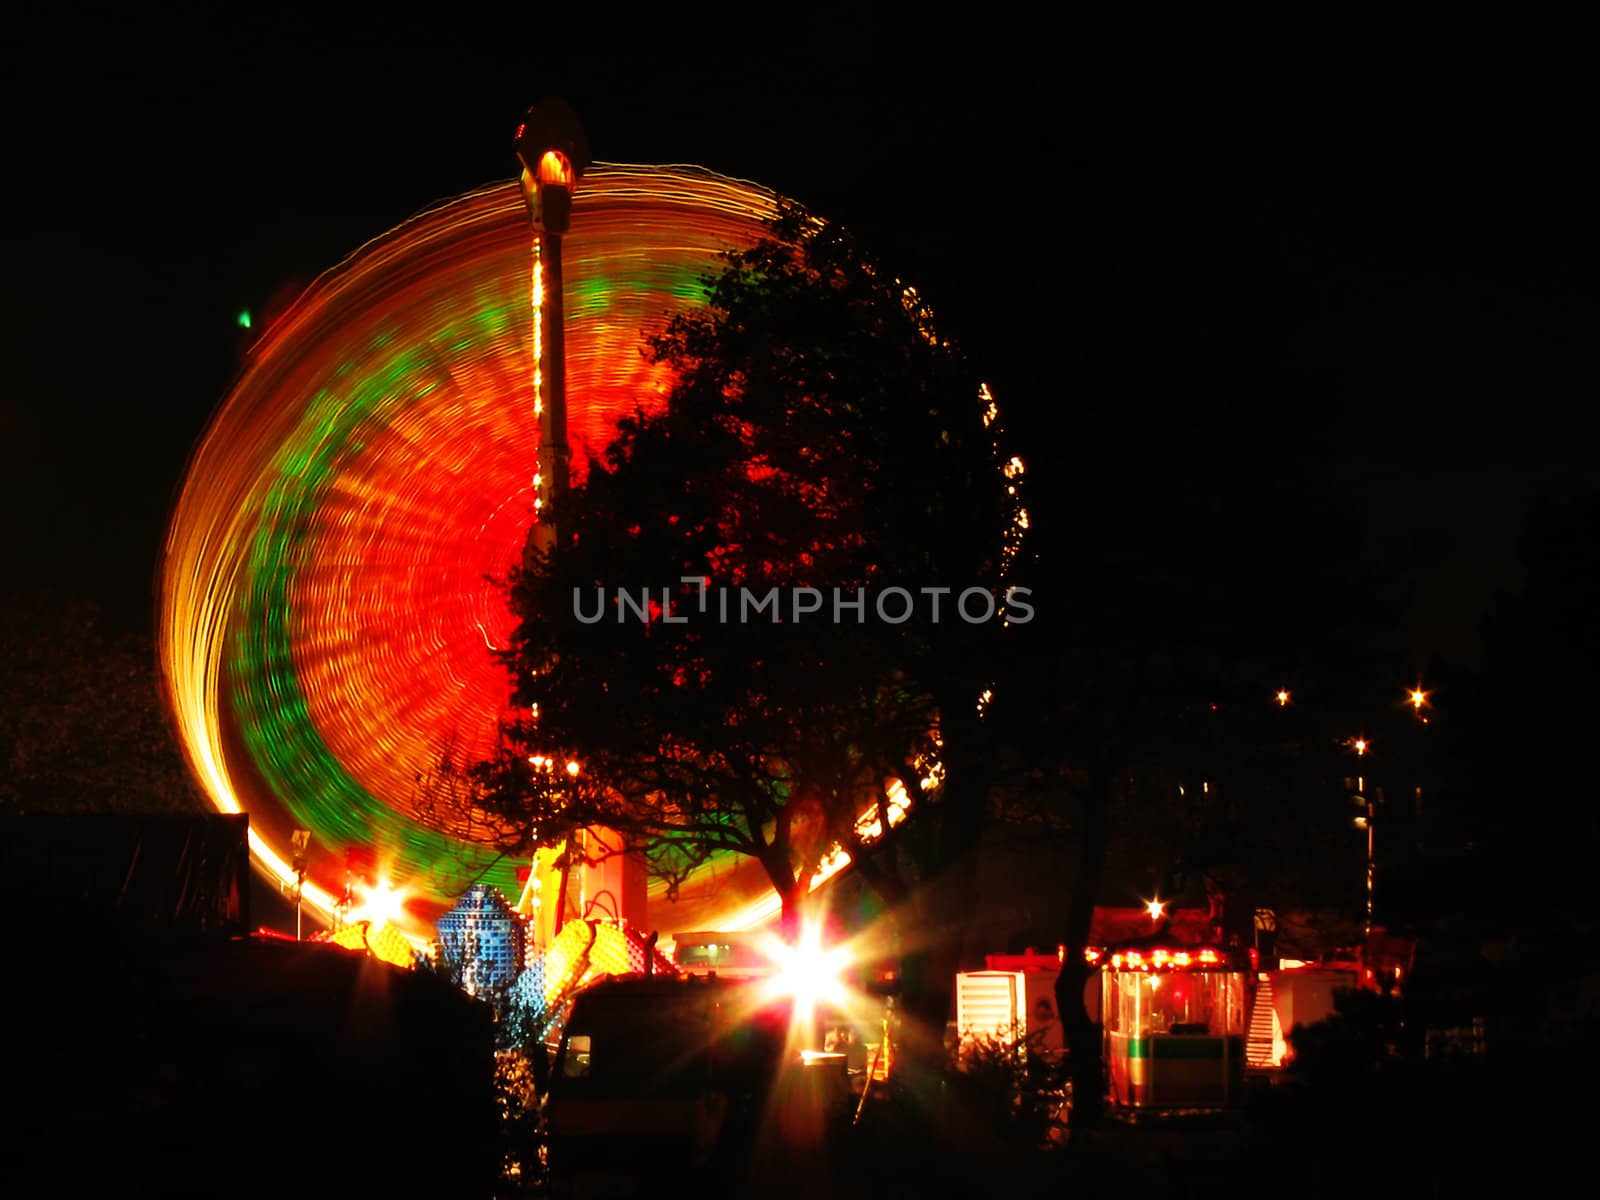 Night-time fairground scene